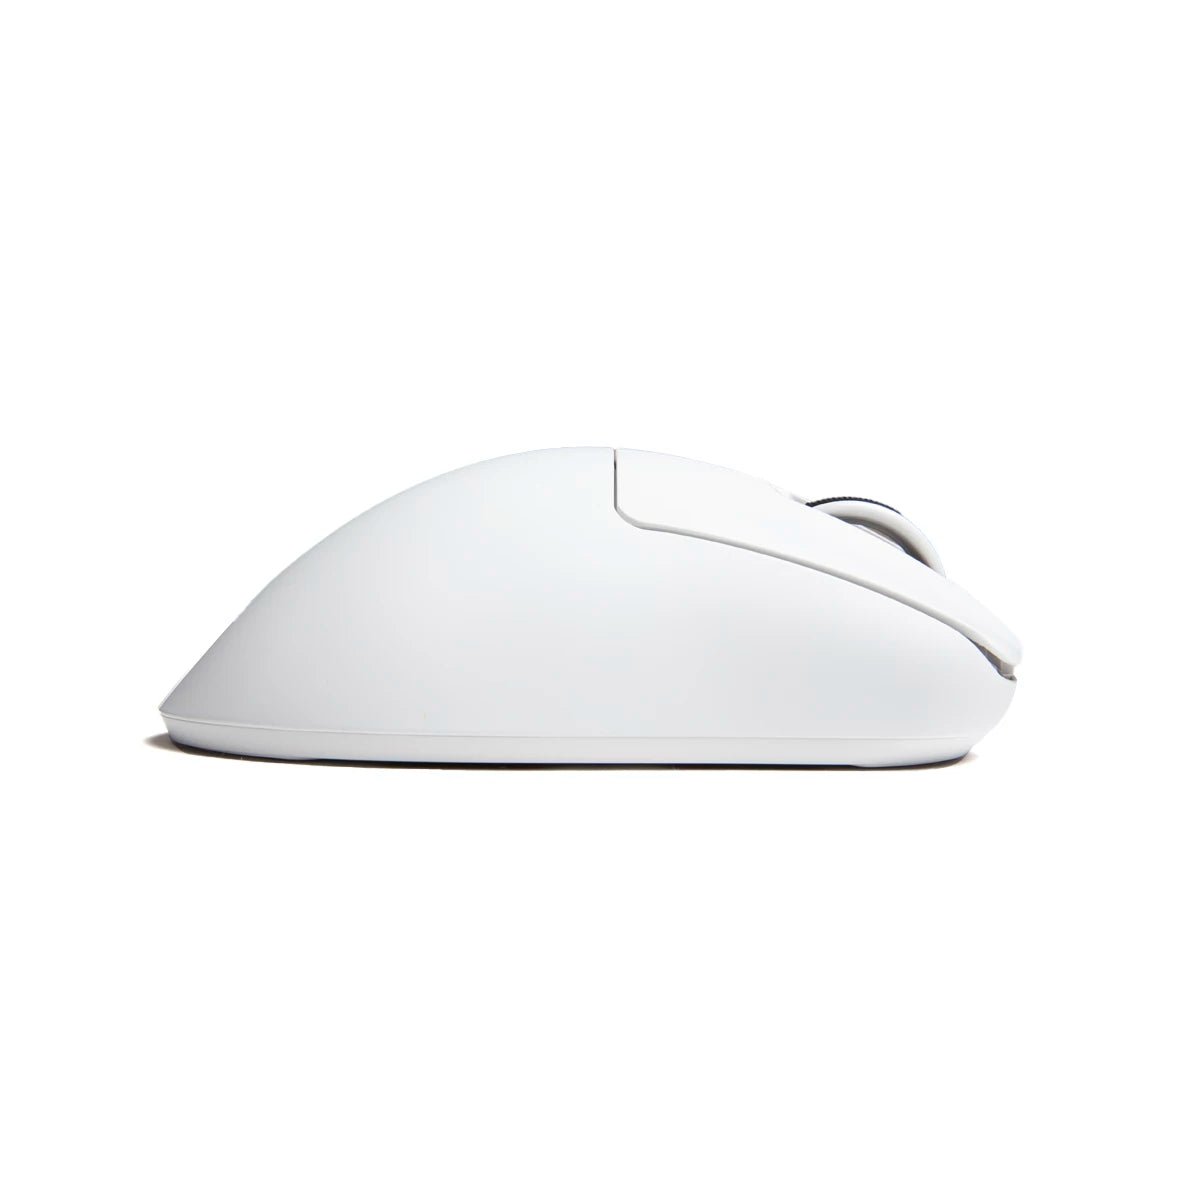 Pulsar Xlite V3 Mini Superlight Gaming Mouse - Divinikey